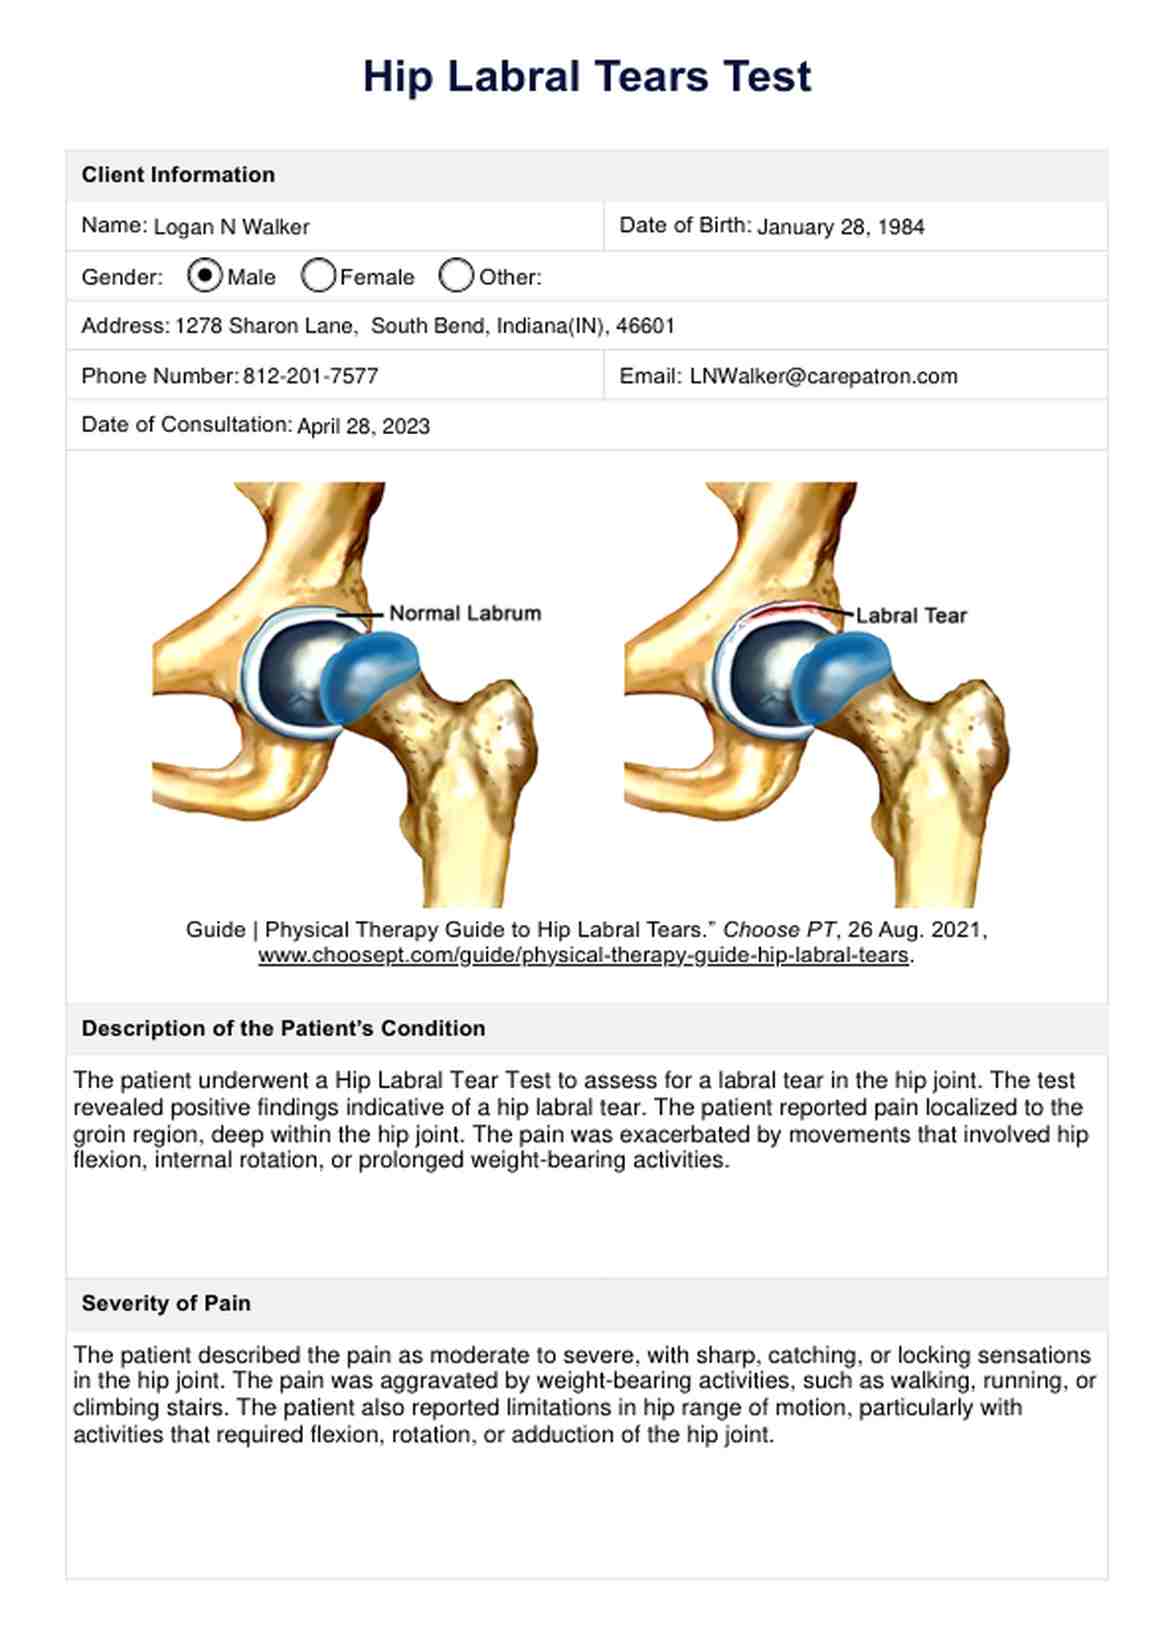 Hip Labral Tears Test PDF Example